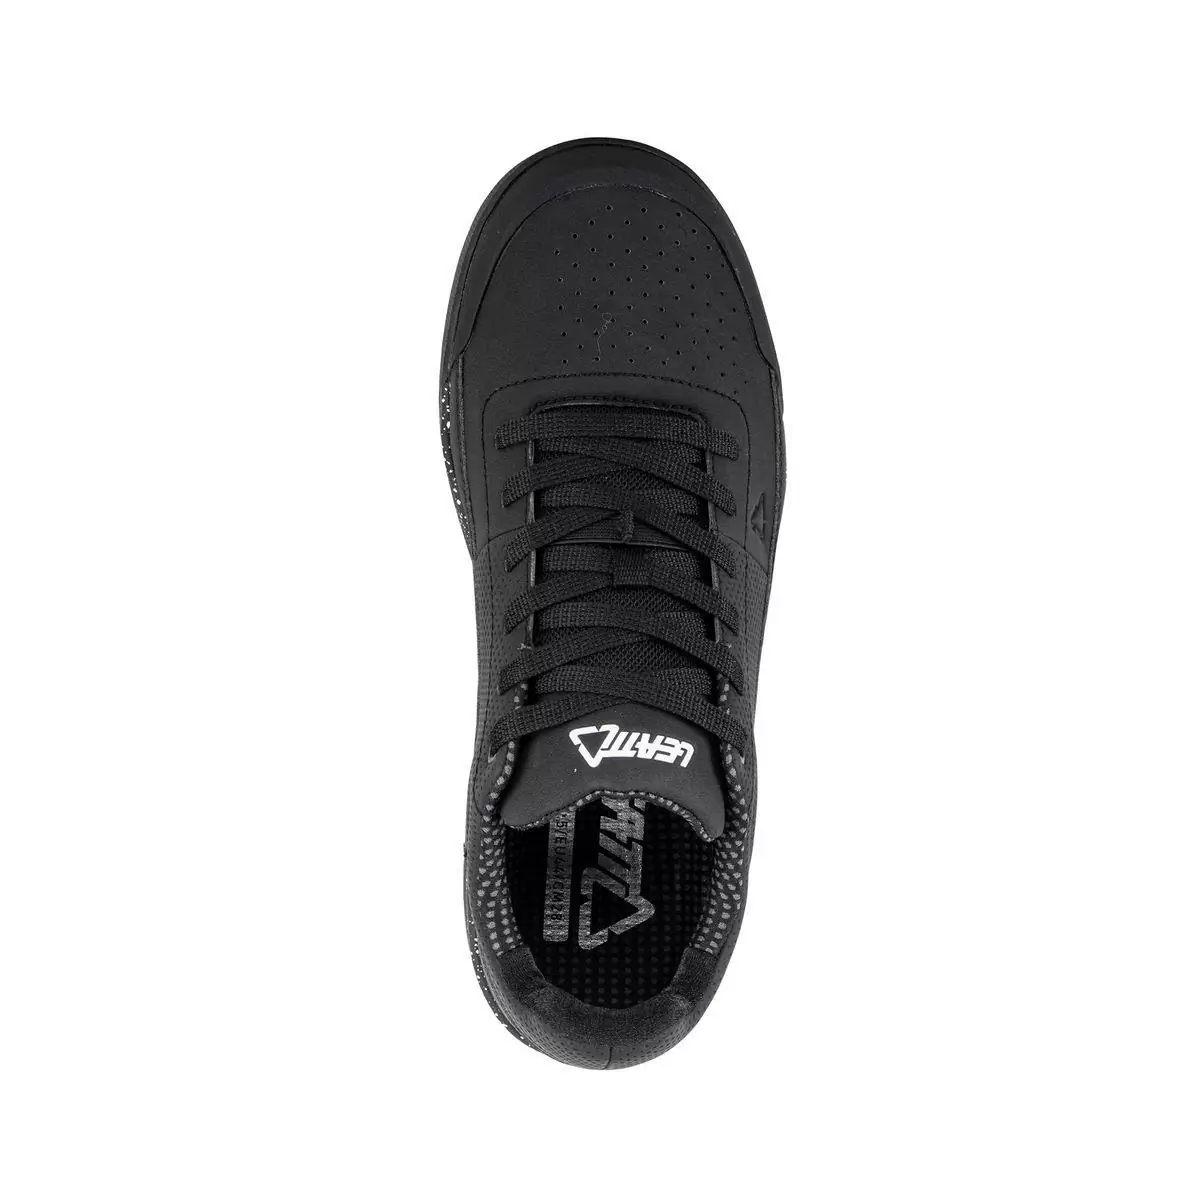 Mtb Shoes 2.0 Flat Black Size 43 #2